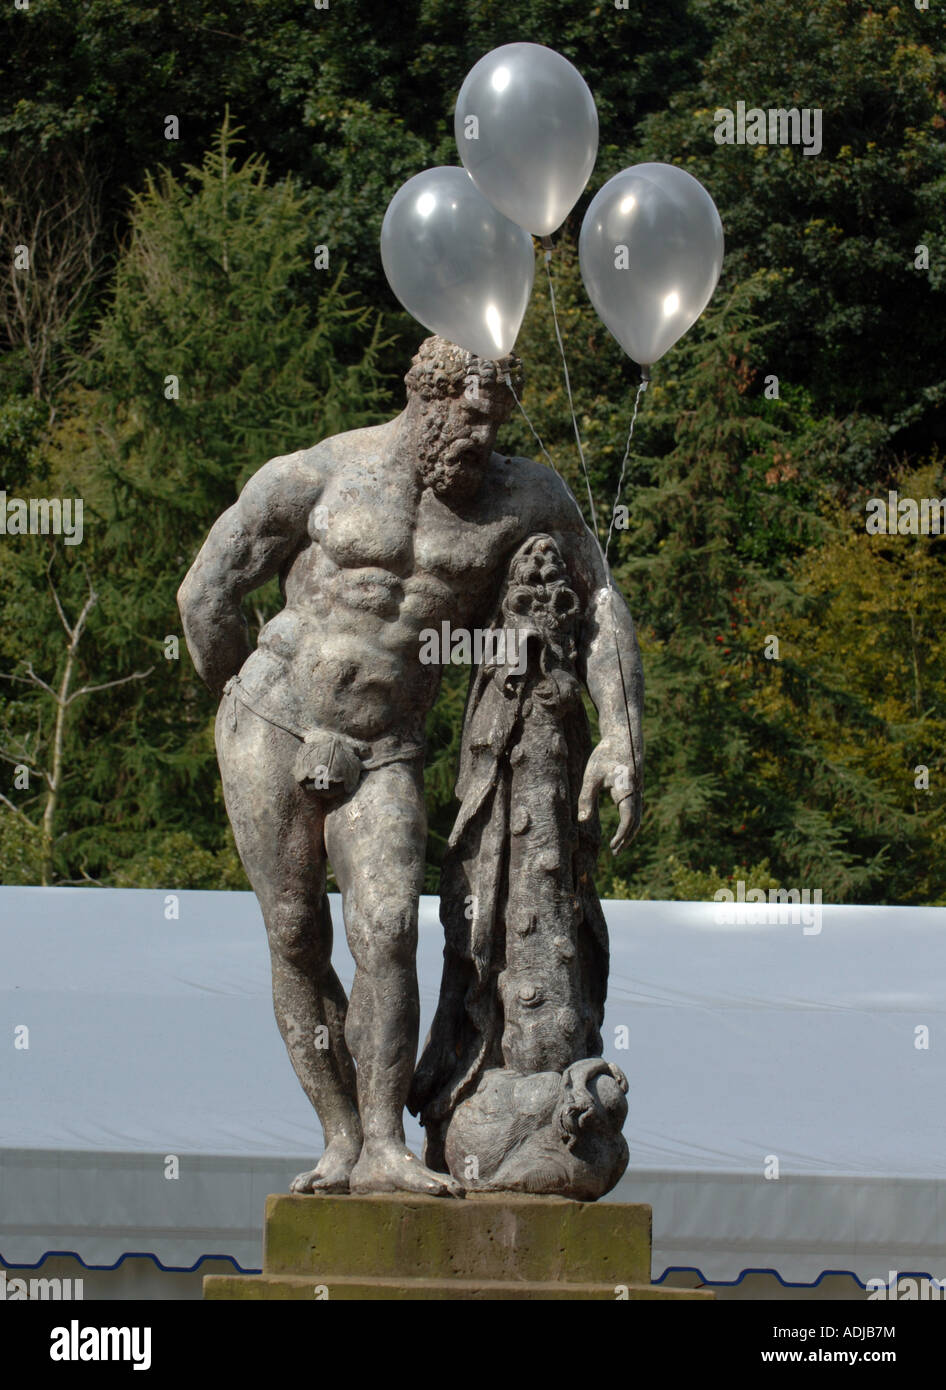 Una estatua de Hércules con globos en Shrewsbury Flower Show, Shropshire, RU Foto de stock